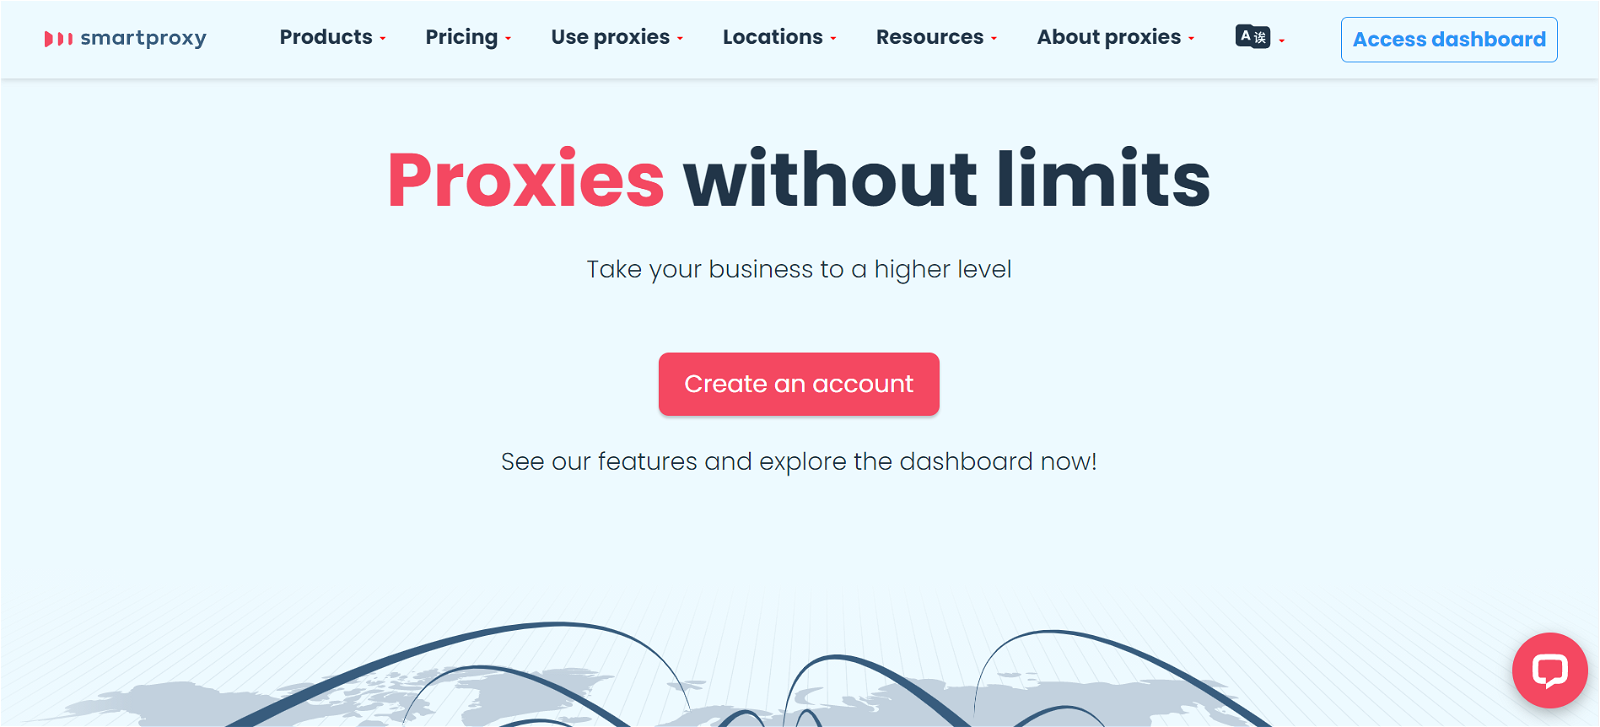 Smartproxy Datacenter sneaker proxy residential proxies datacenter